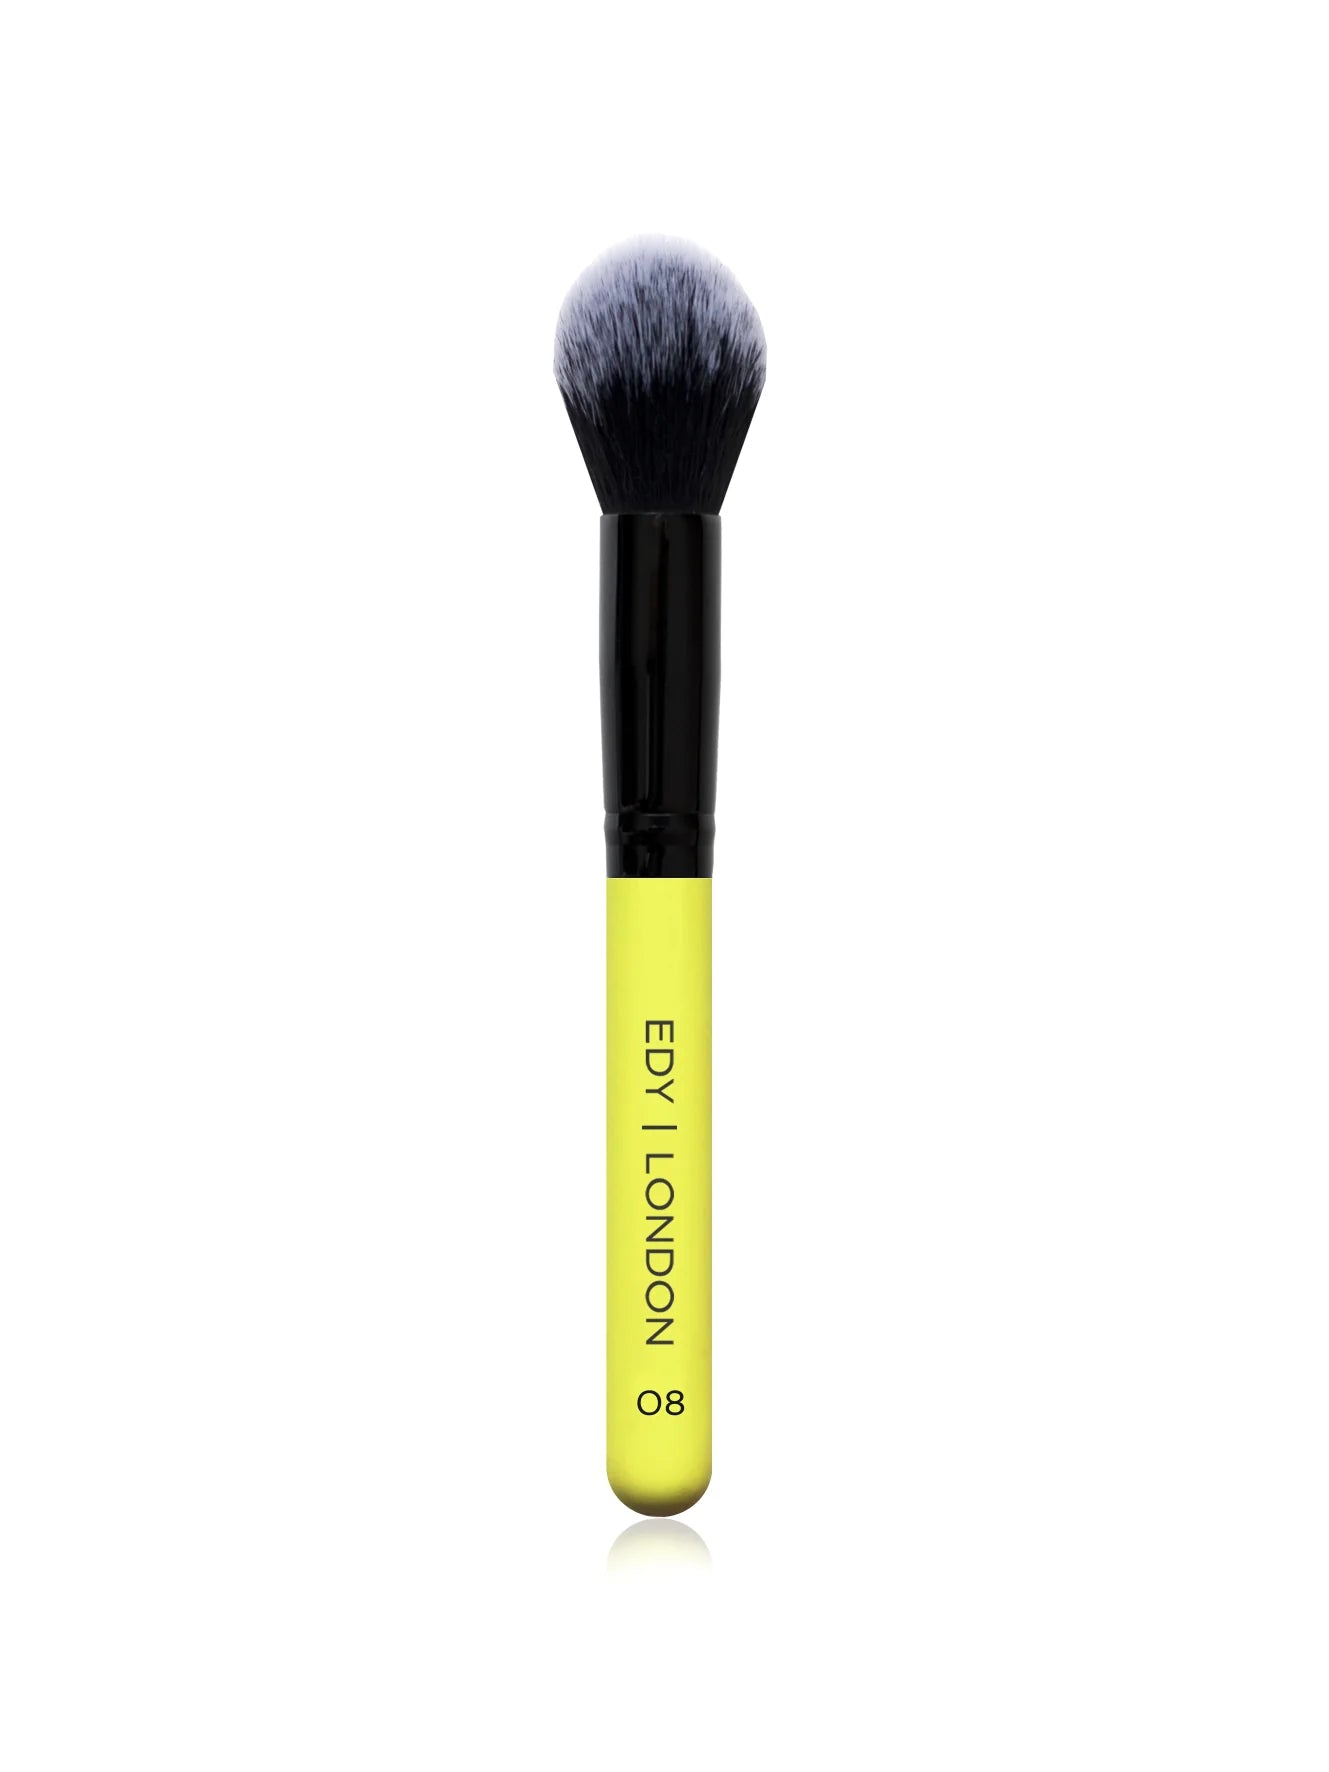 Small Tapered Blush Brush 08 Make-up Brush EDY LONDON Lemon   - EDY LONDON PRODUCTS UK - The Best Makeup Brushes - shop.edy.london